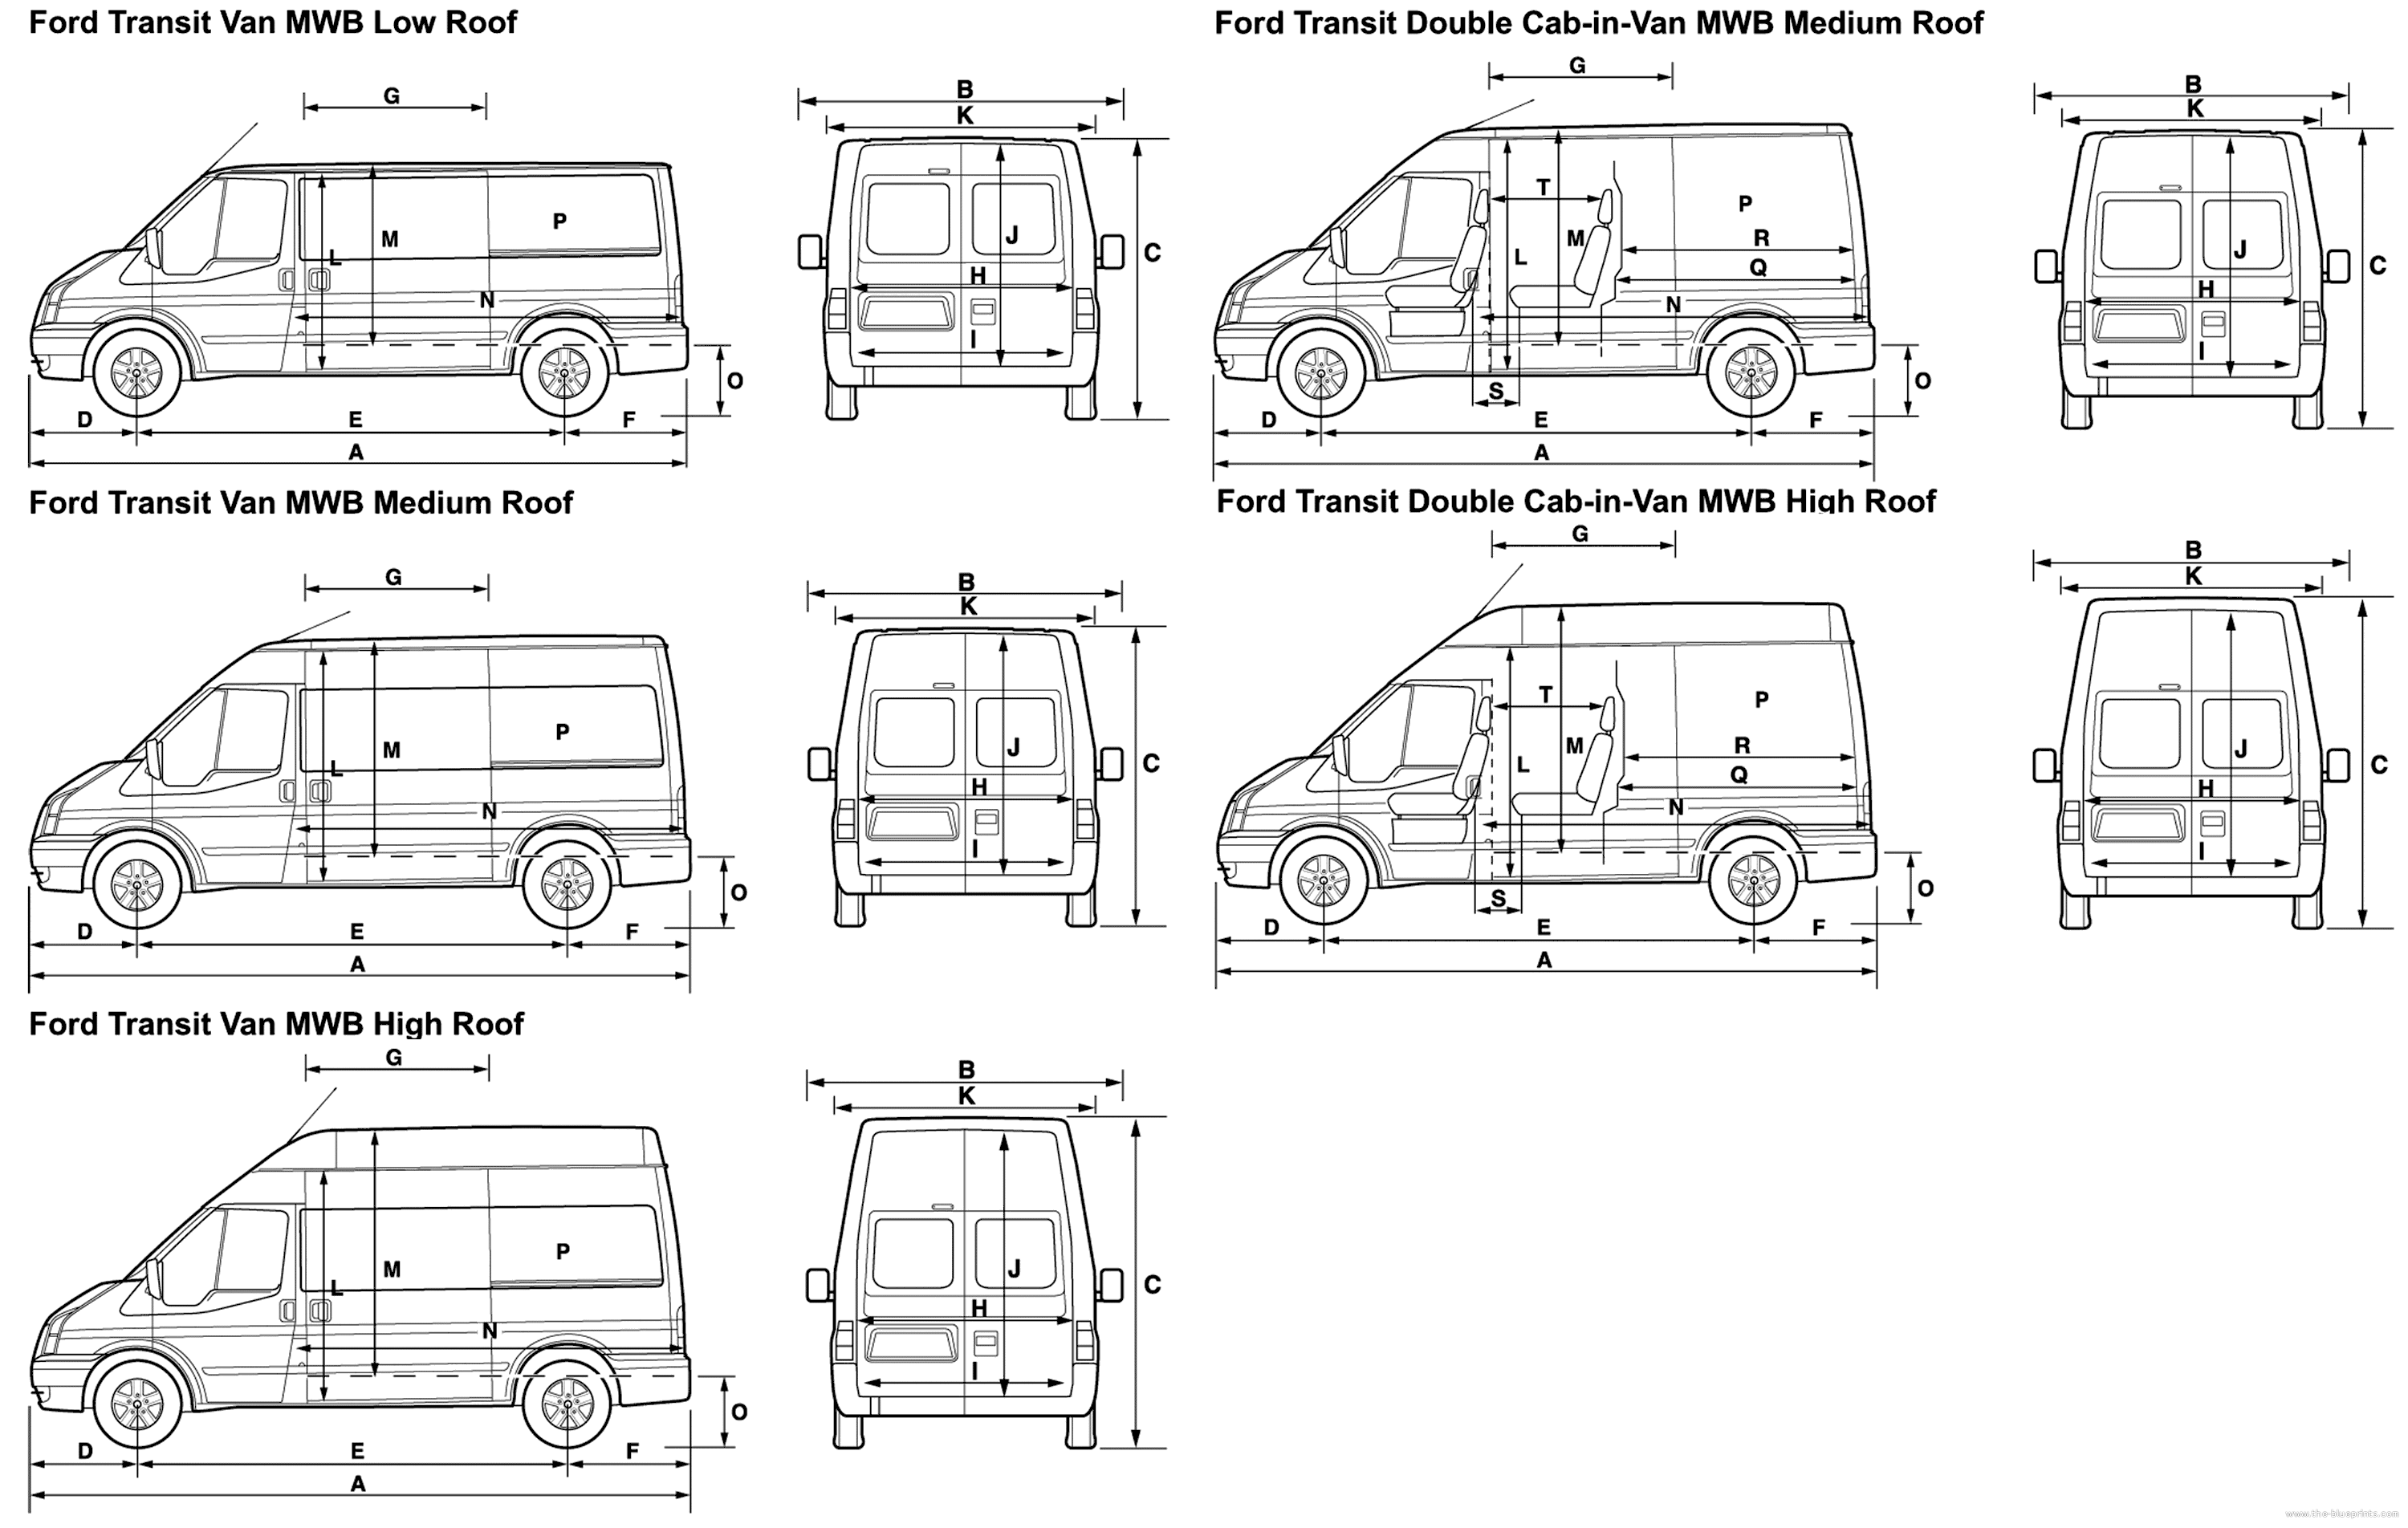 Ford transit connect lwb internal dimensions #3